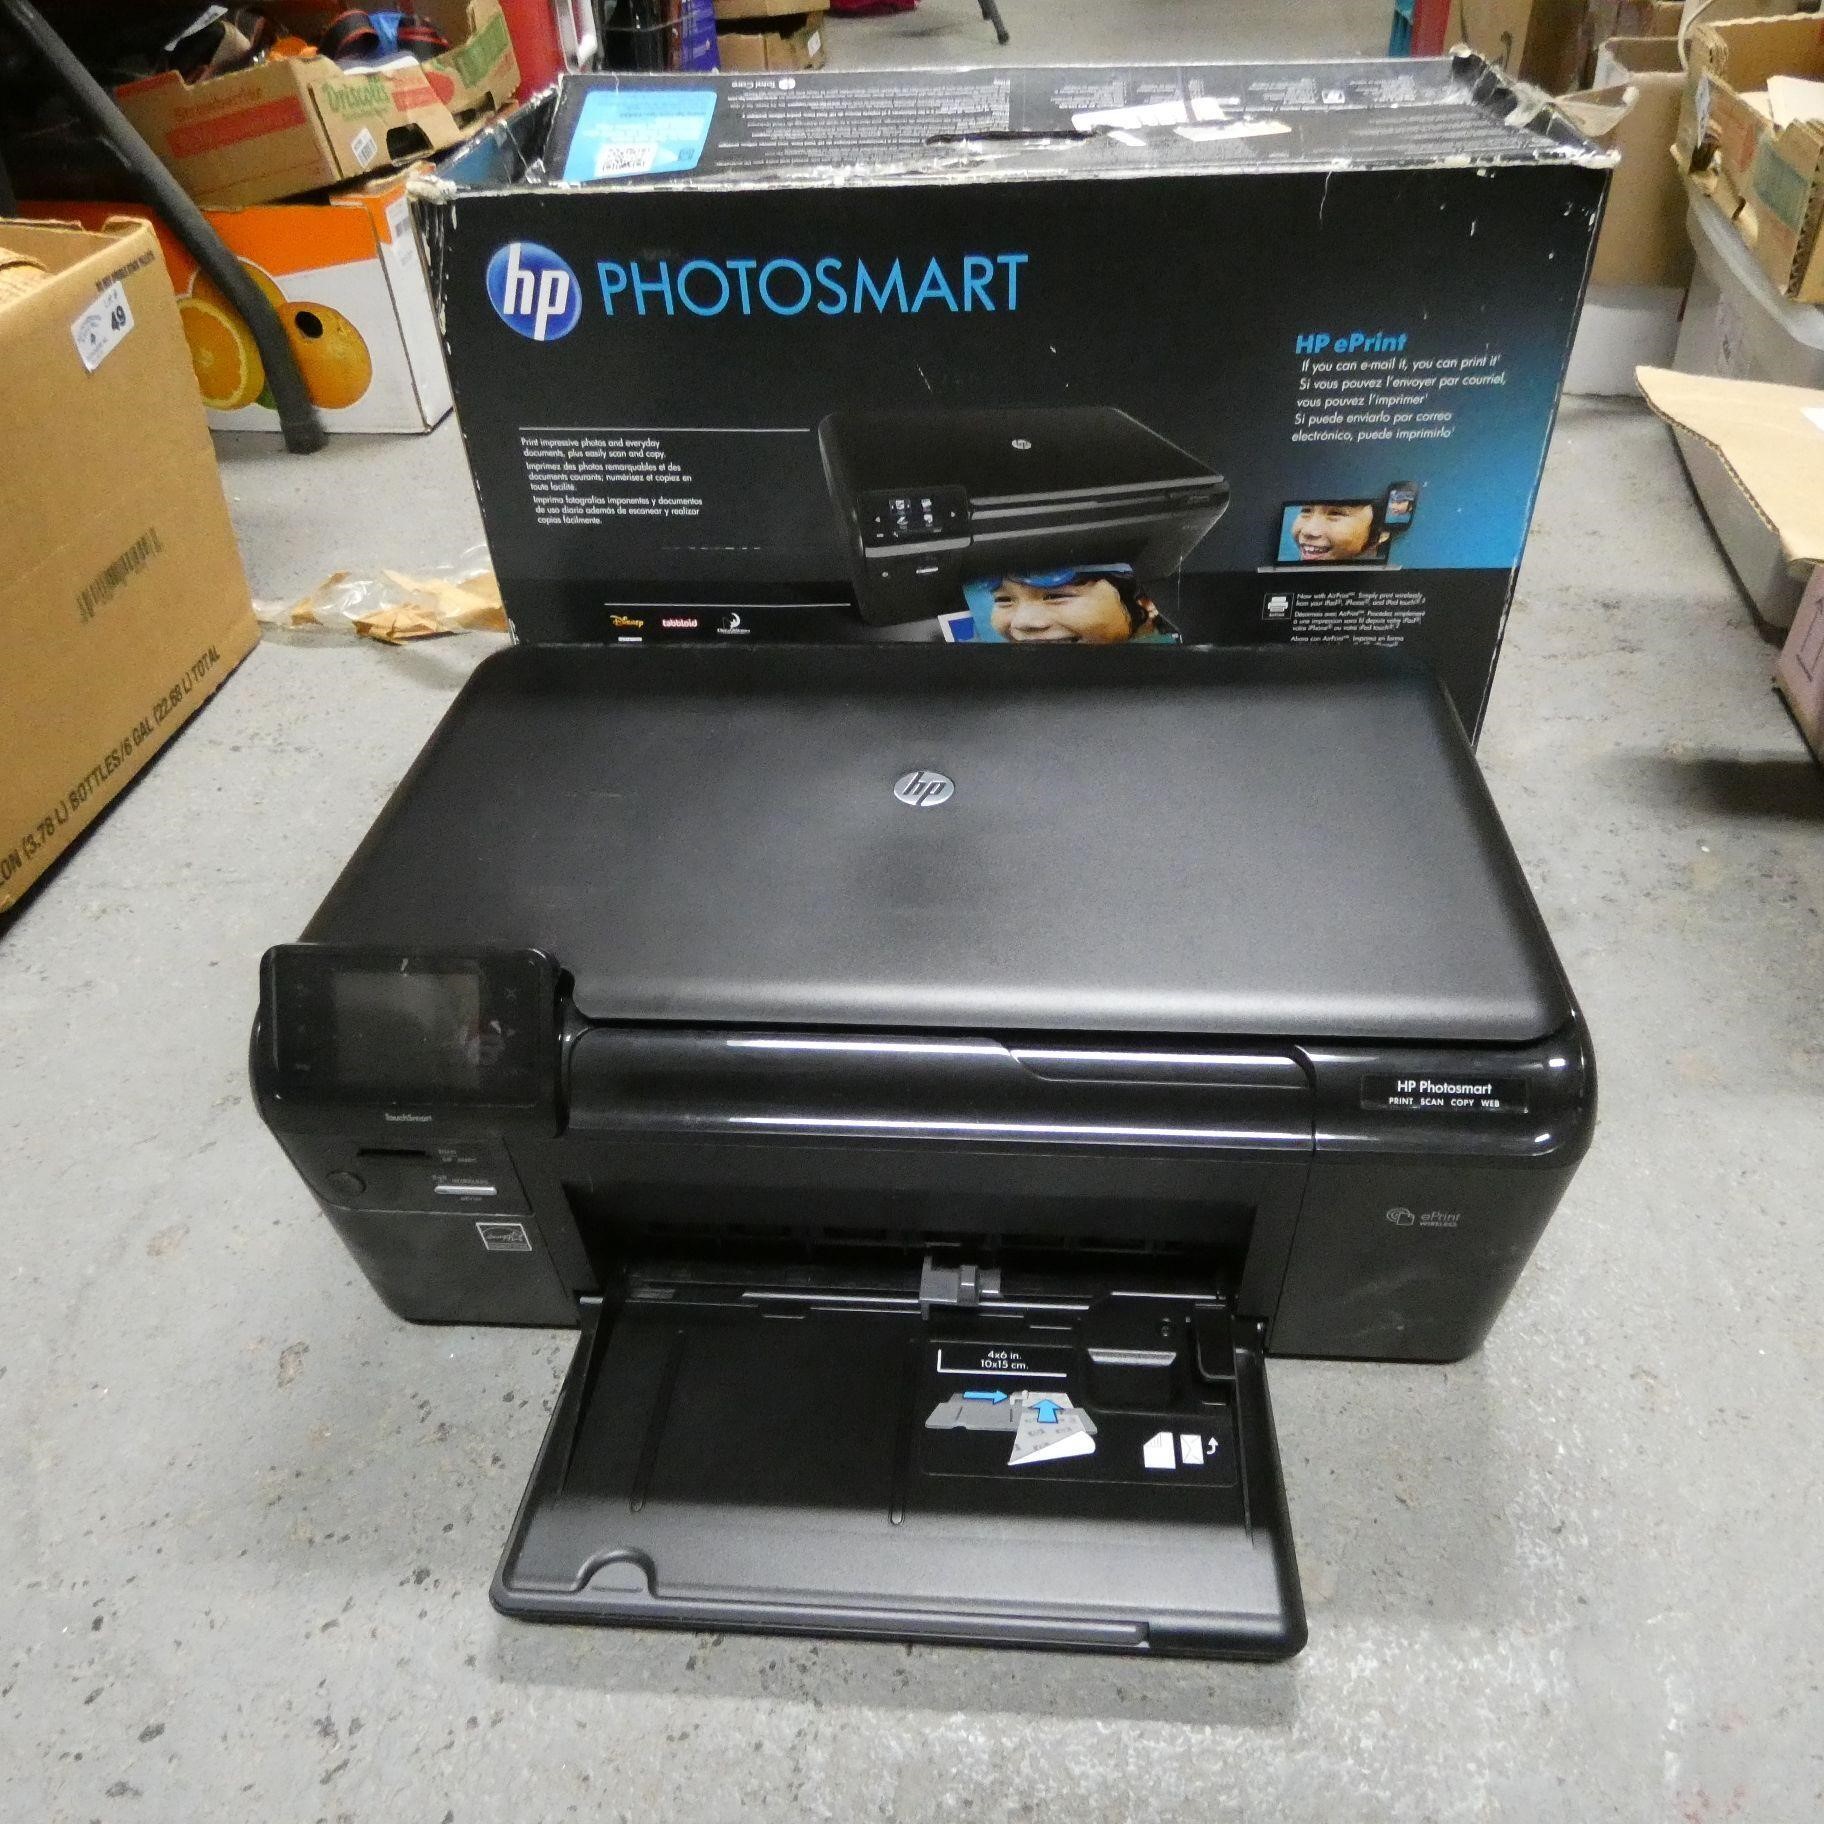 HP Photosmart Printer - Untested